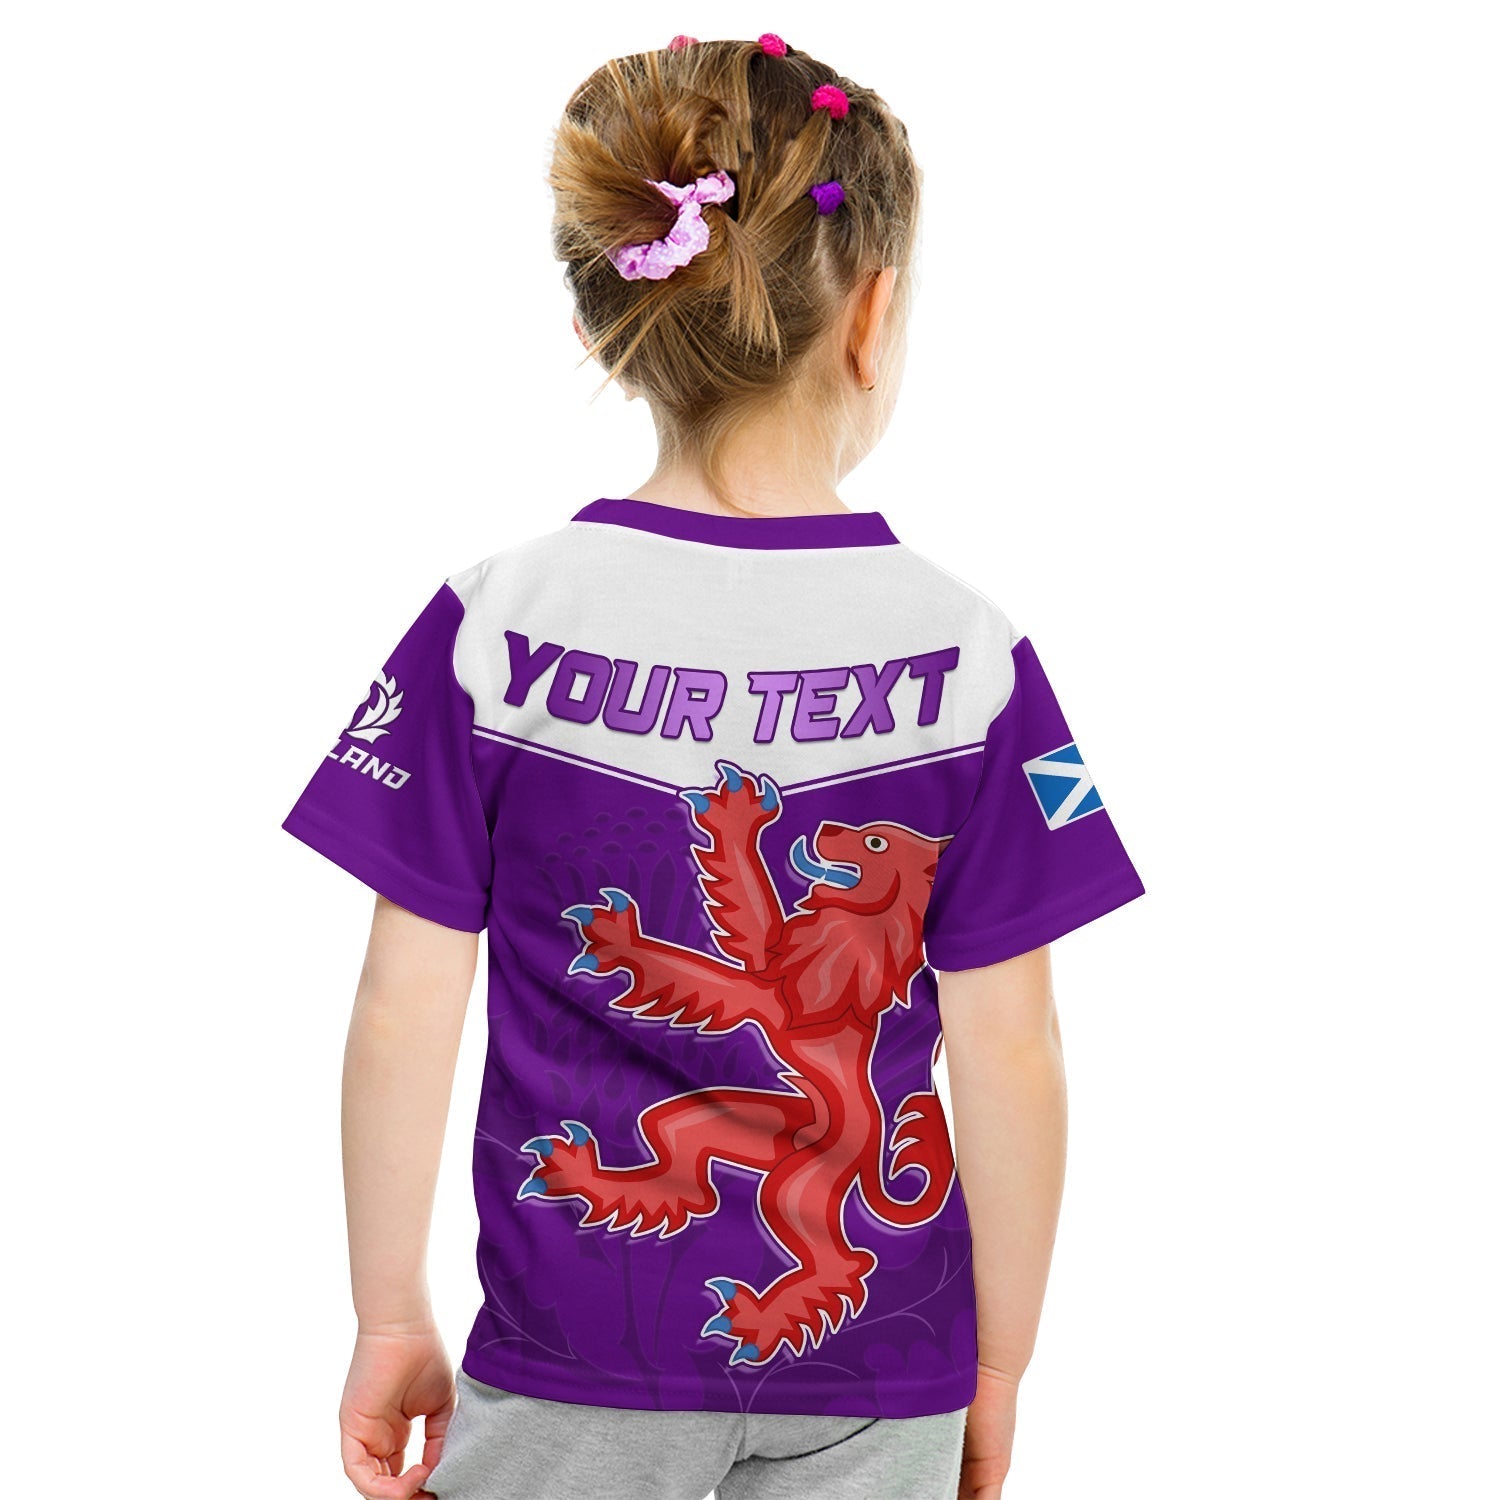 custom-personalised-scottish-rugby-t-shirt-kid-map-of-scotland-thistle-purple-version-lt14